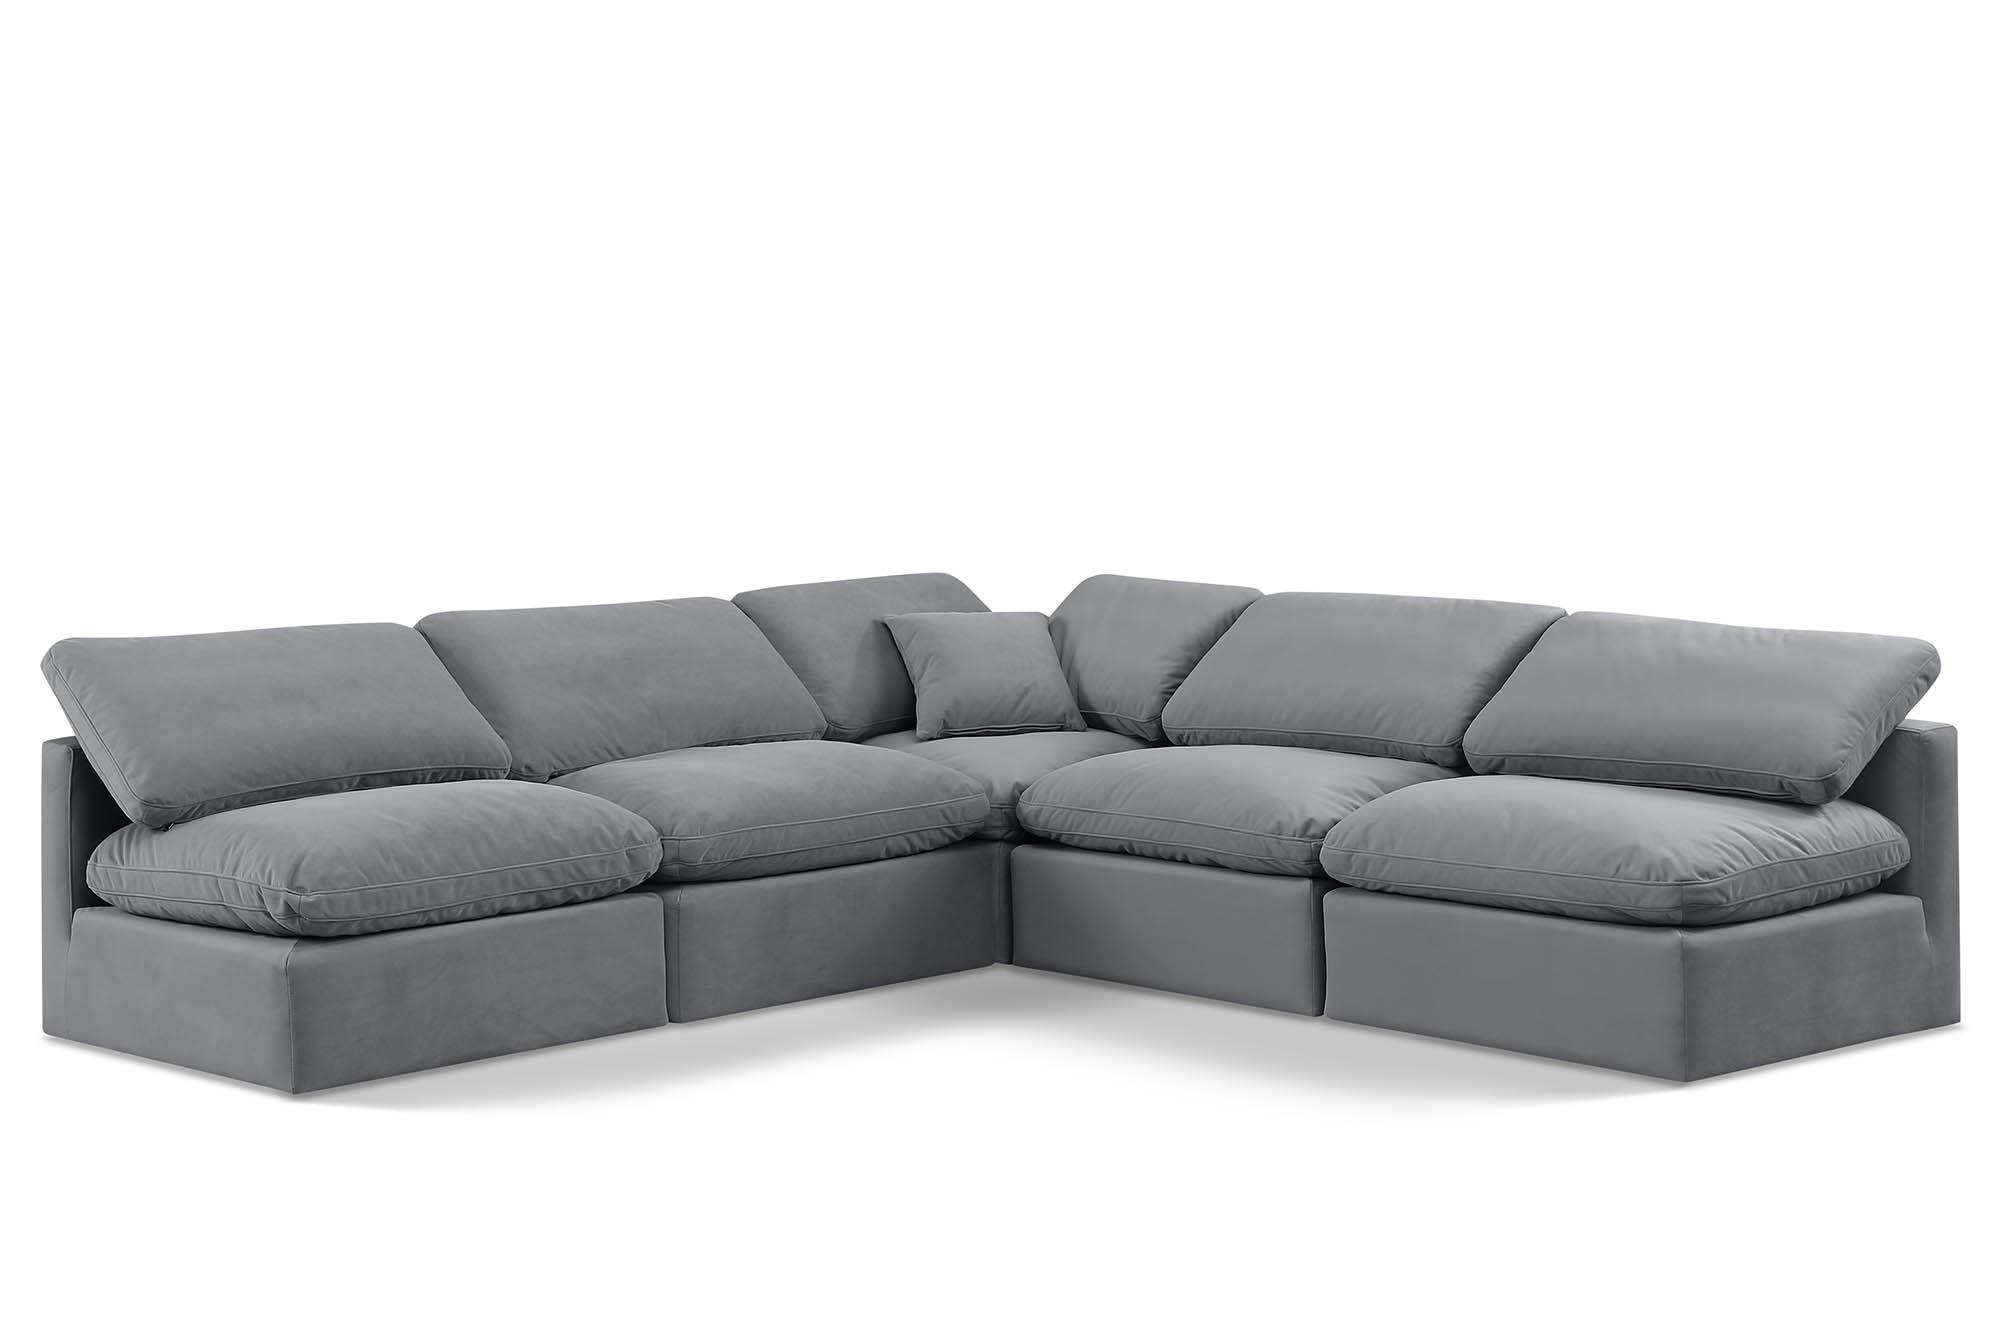 Contemporary, Modern Modular Sectional Sofa INDULGE 147Grey-Sec5B 147Grey-Sec5B in Gray Velvet